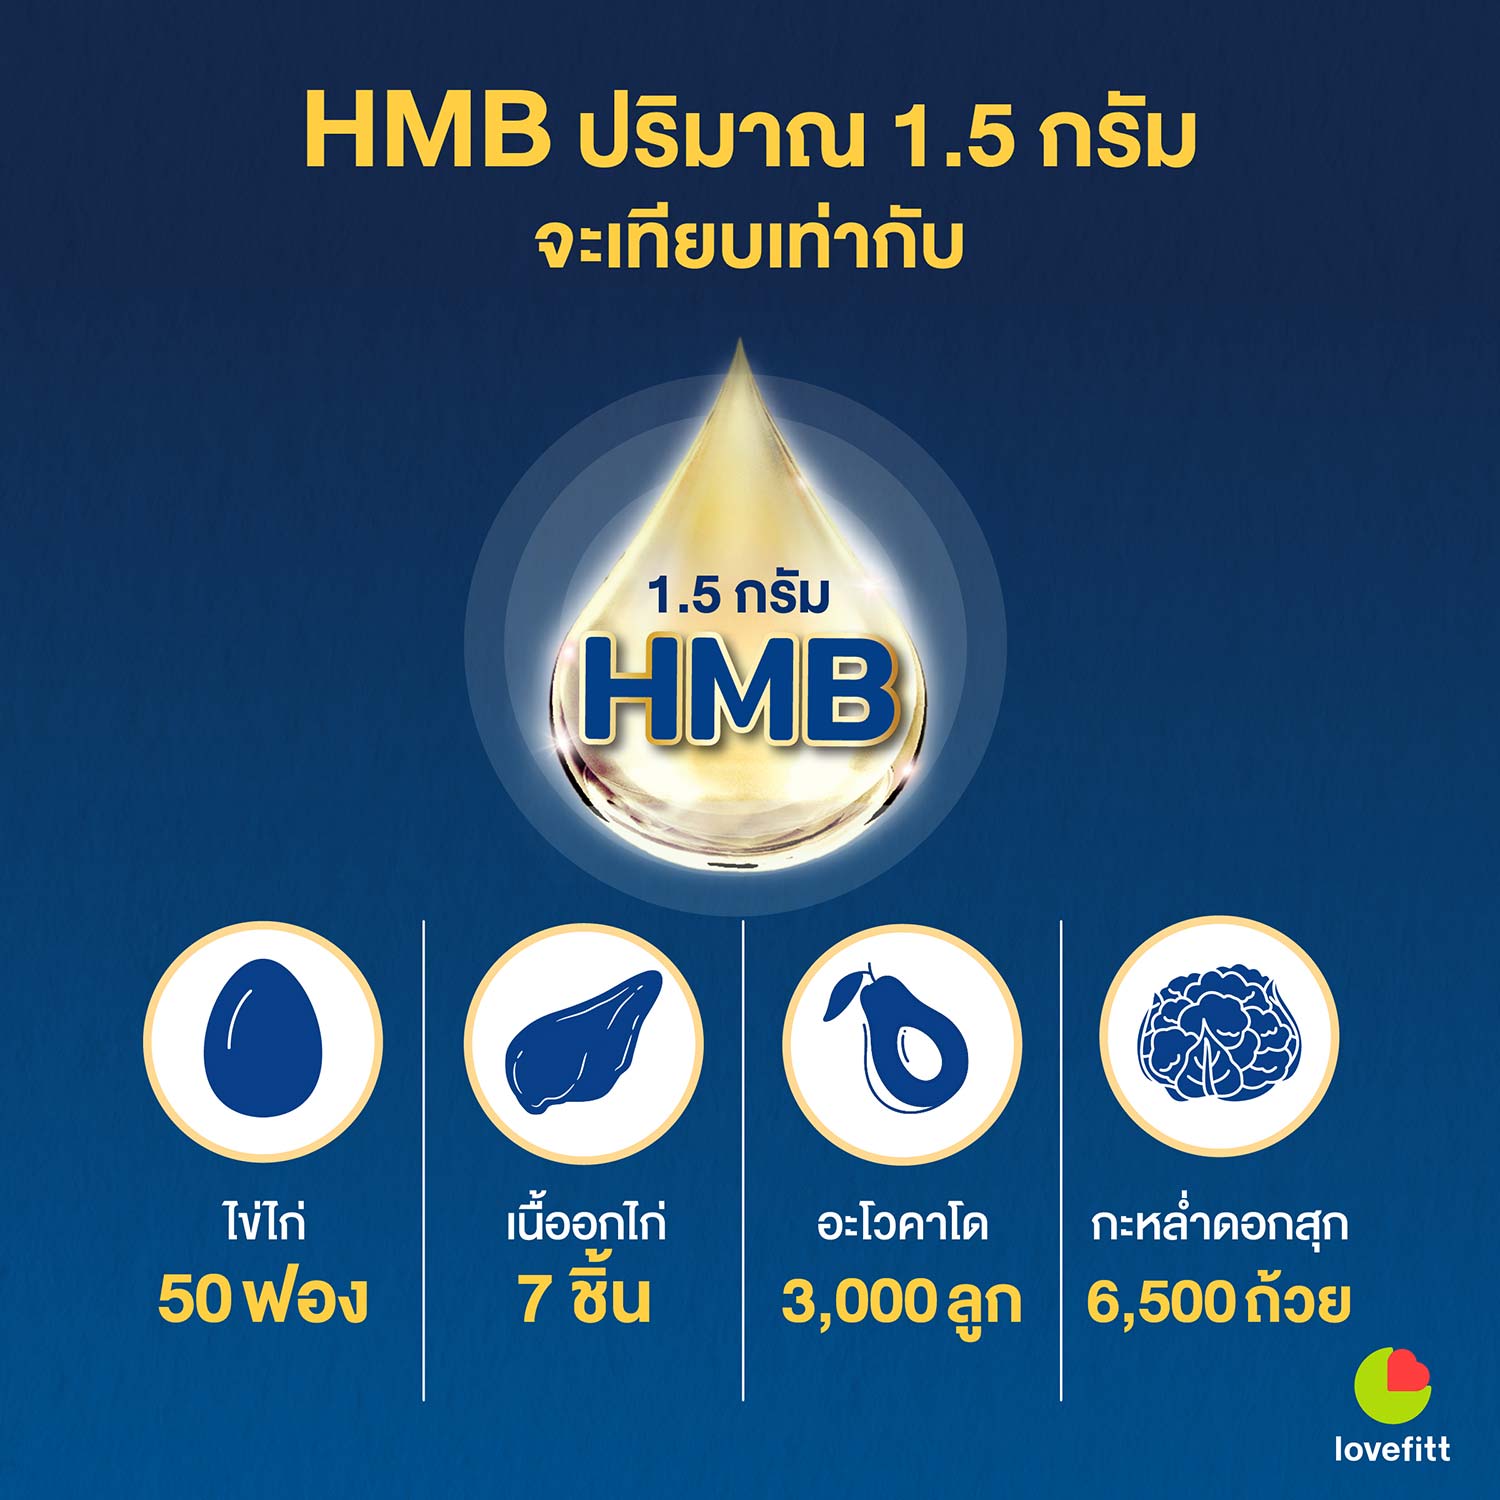 HMB ปริมาณ 1.5 กรัม